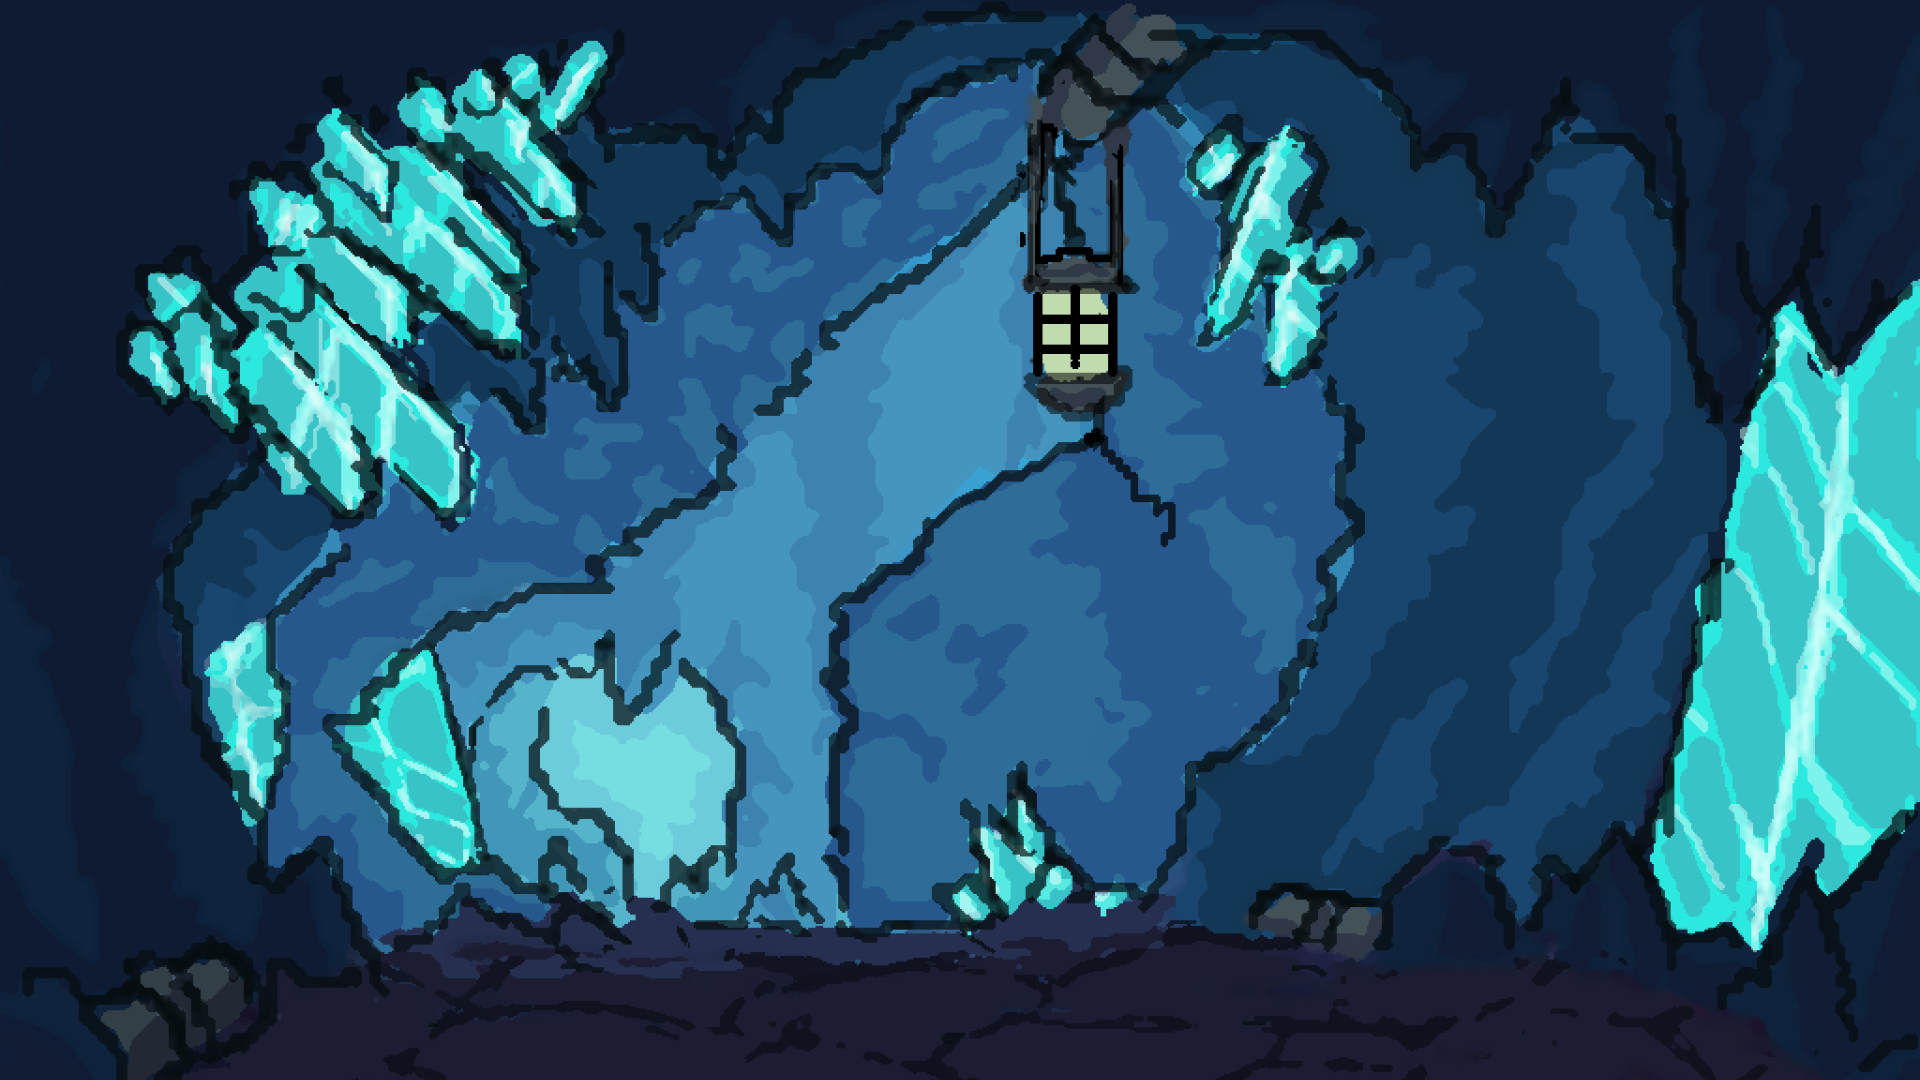 A crystal cave